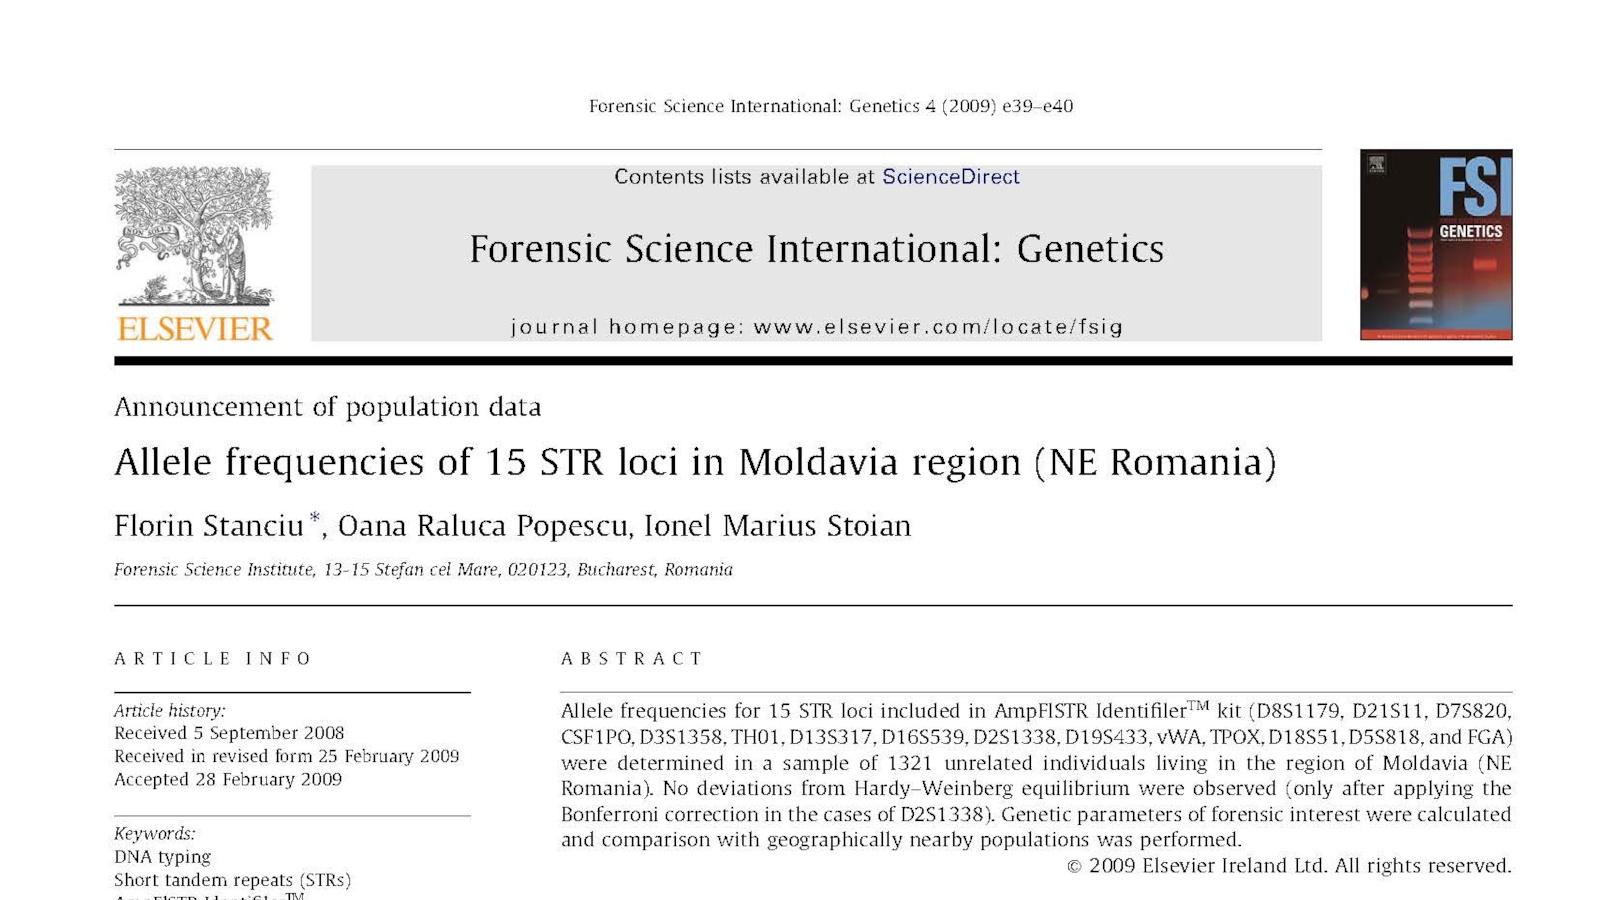 2009 - Allele frequencies of 15 STR loci in Moldavia region (NE Romania)